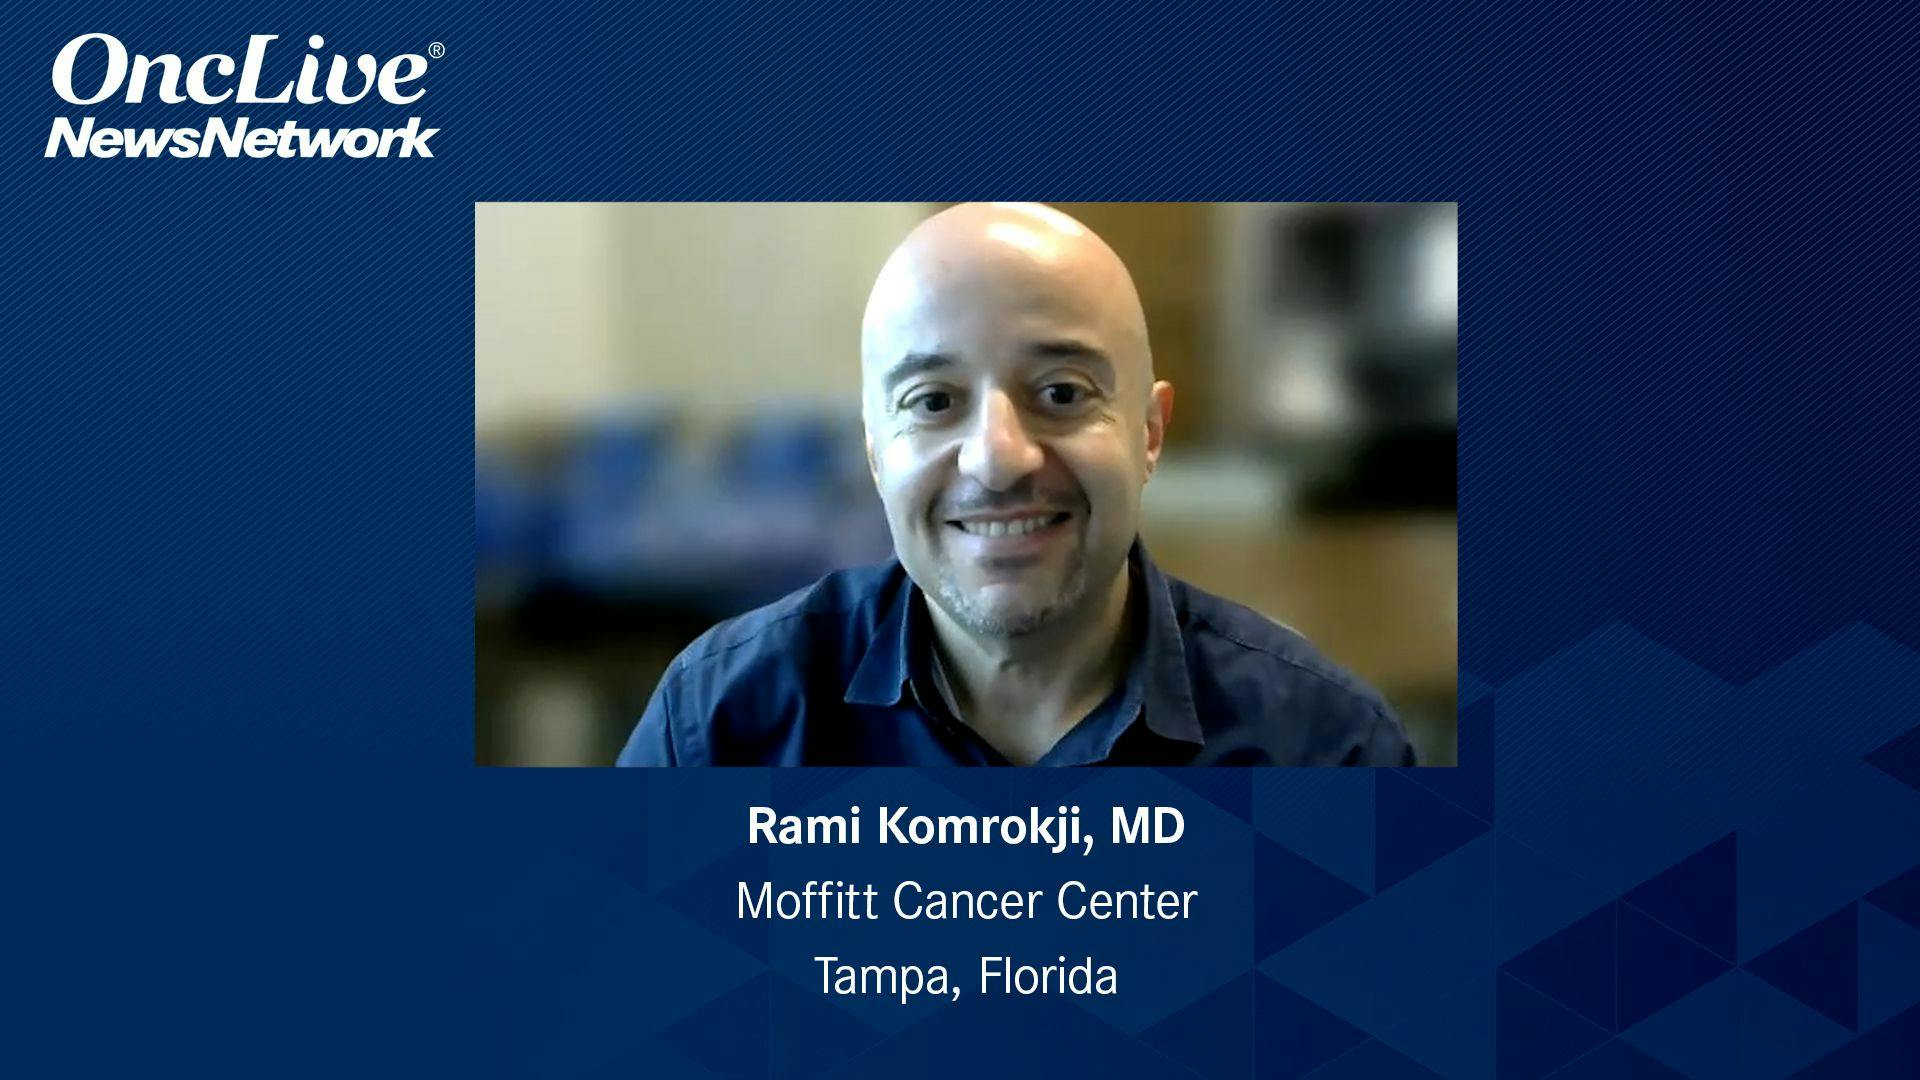 Rami Komrokji, MD, an expert on myelodysplastic syndromes and myelofibrosis